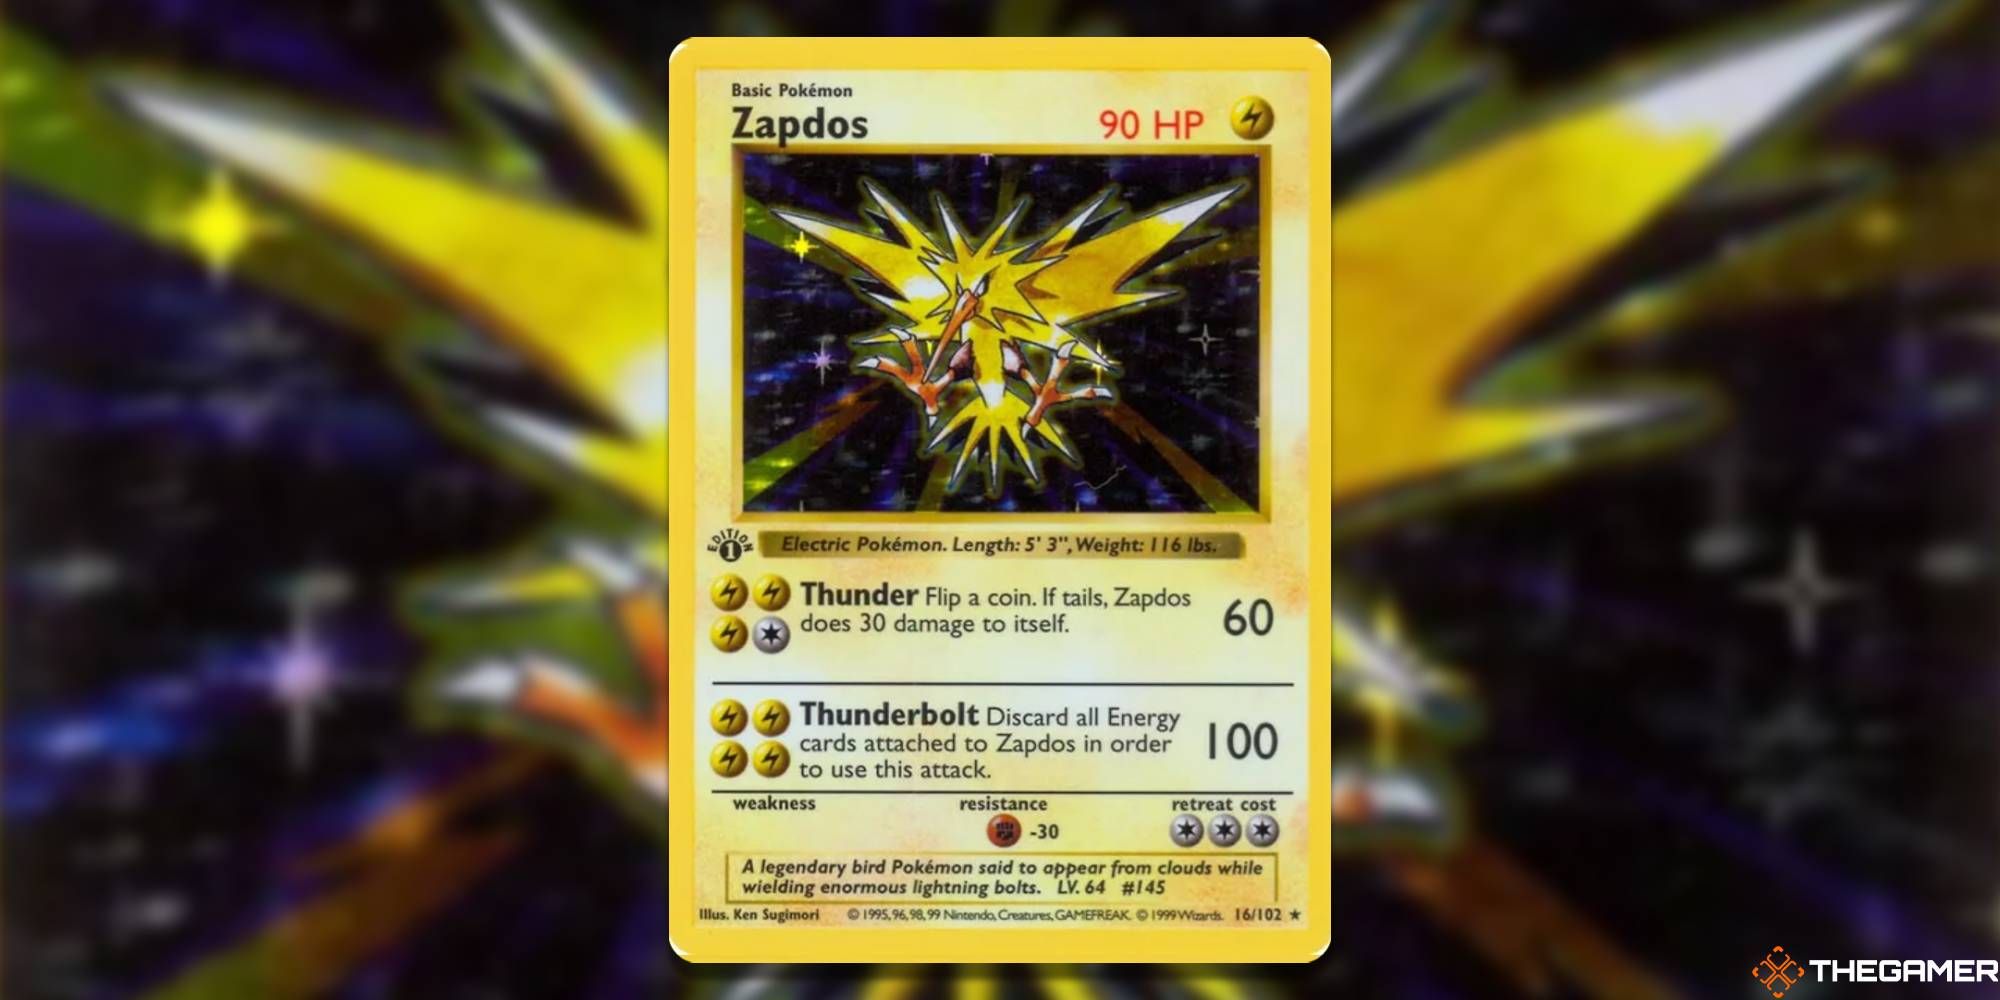 Pokemon Trading Cards Lightning Set